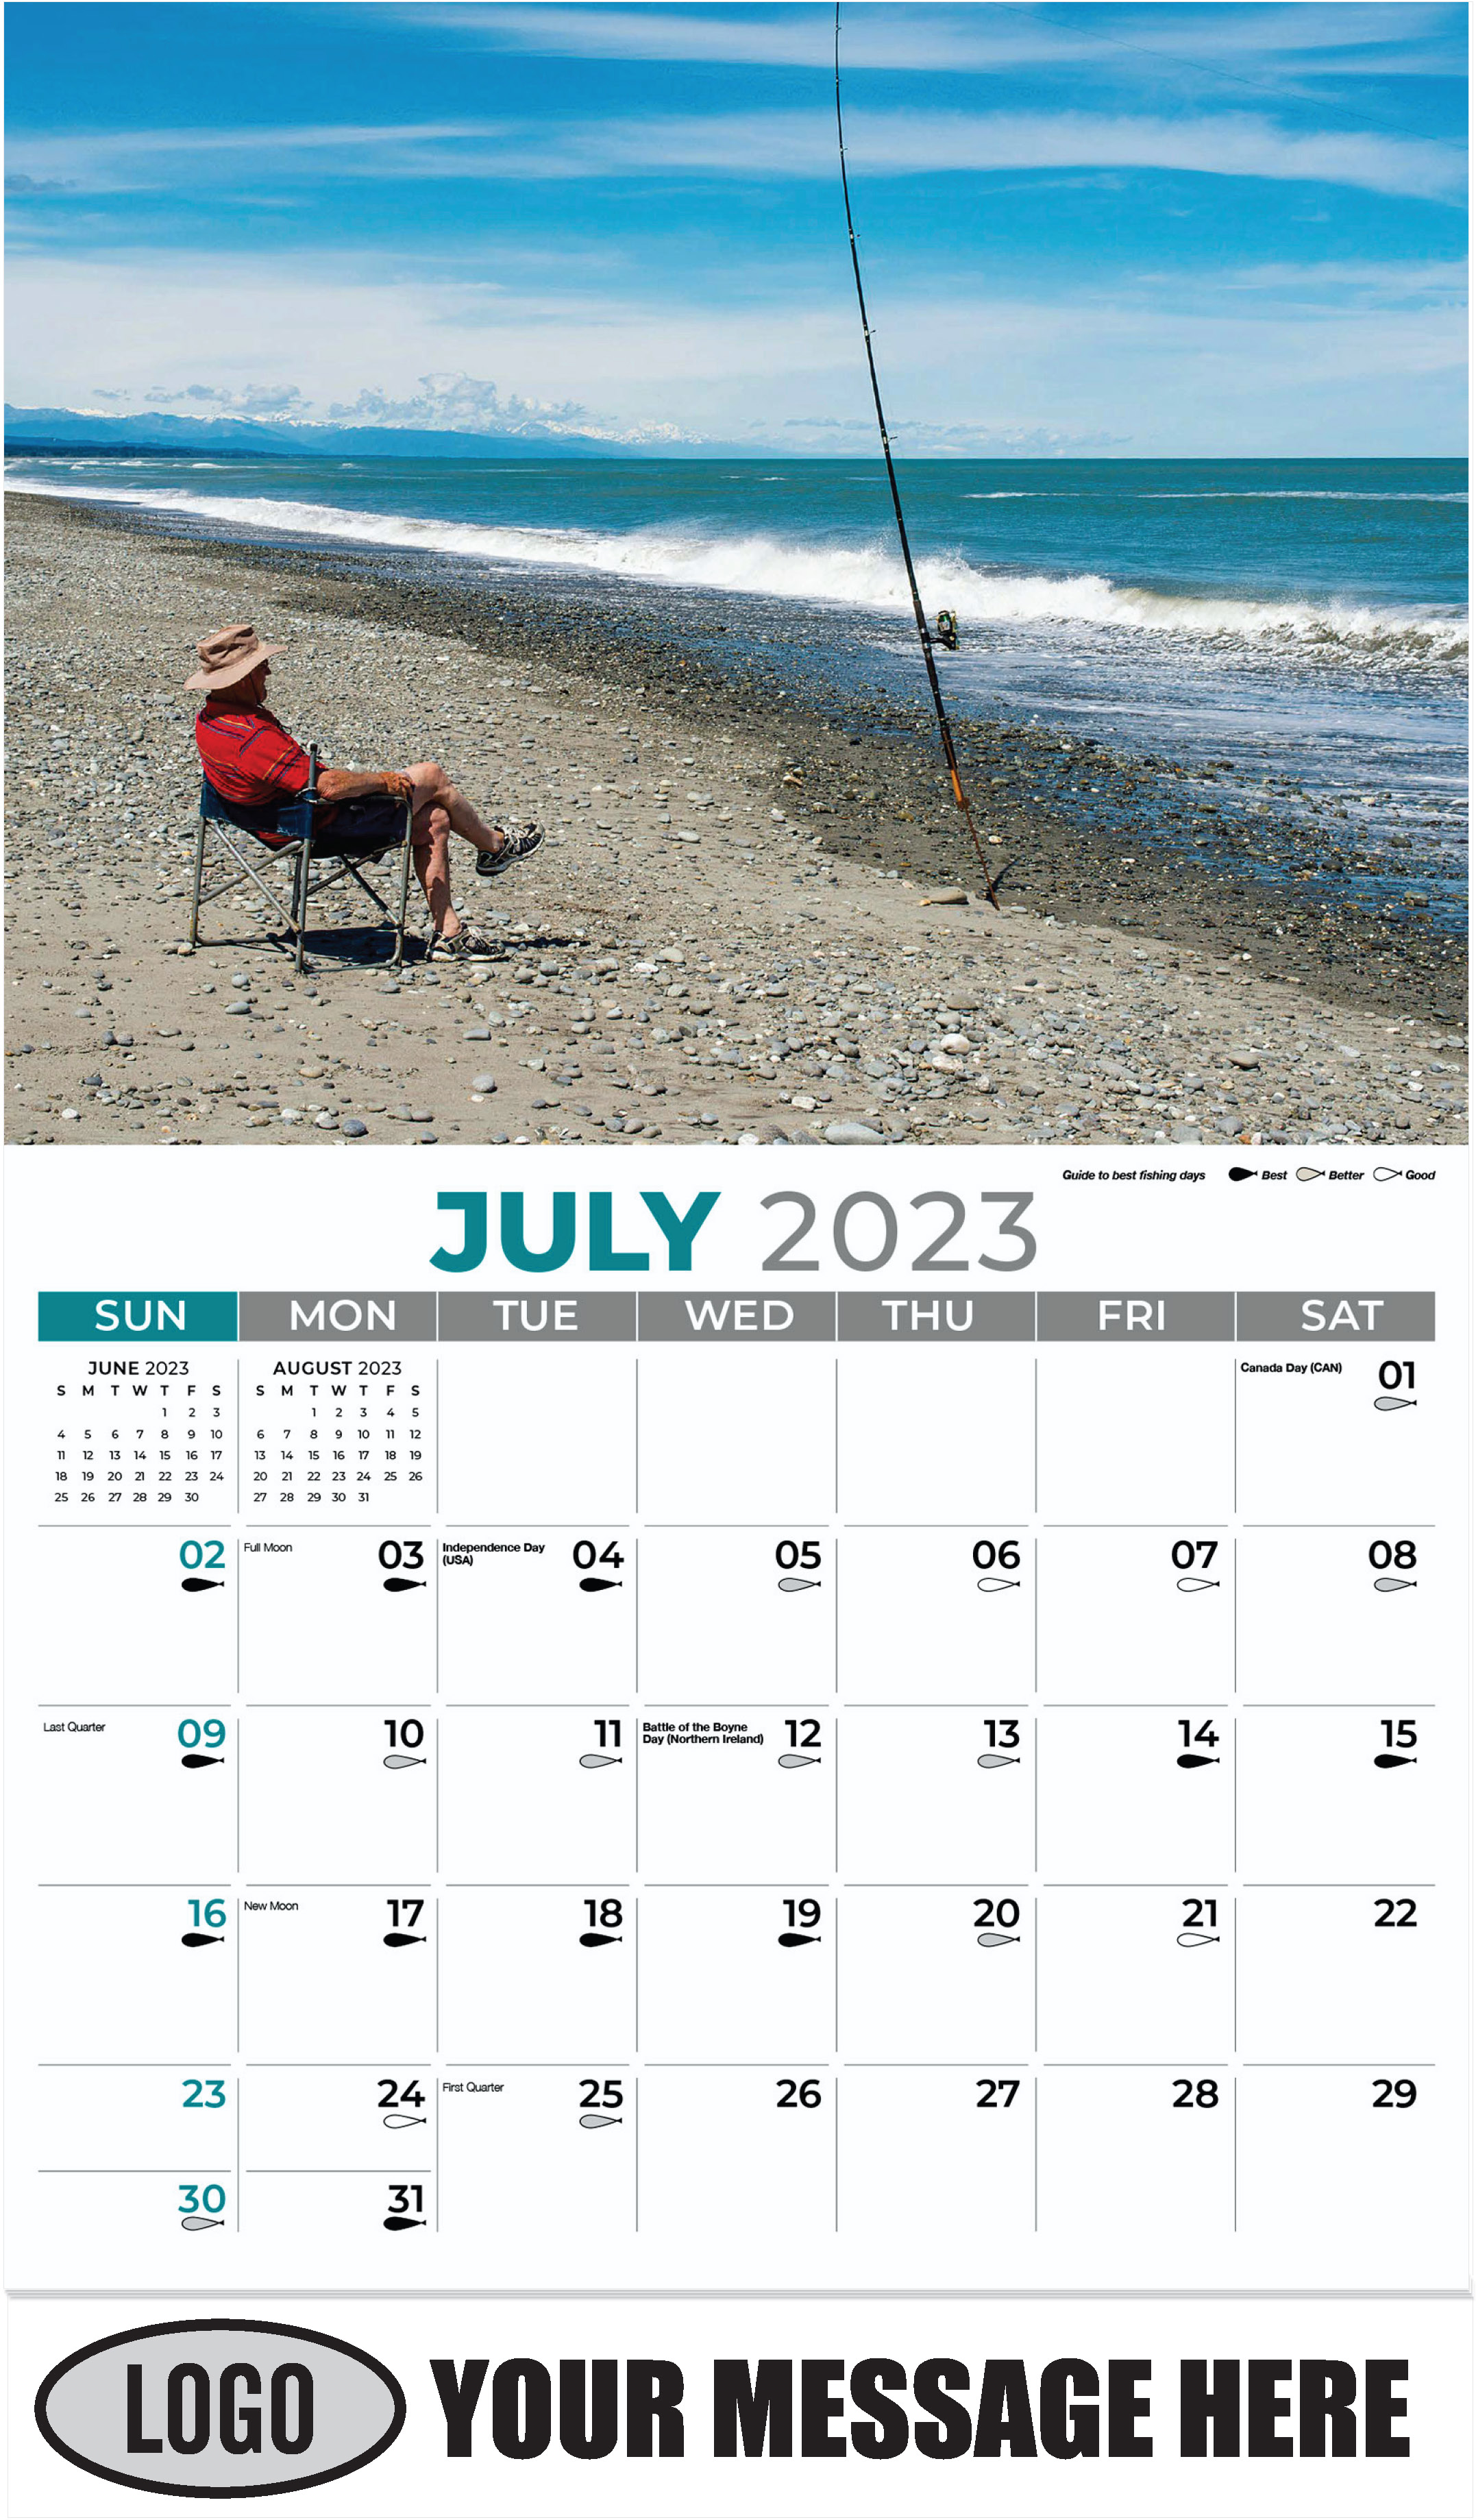 July - Fishing & Hunting 2023 Promotional Calendar